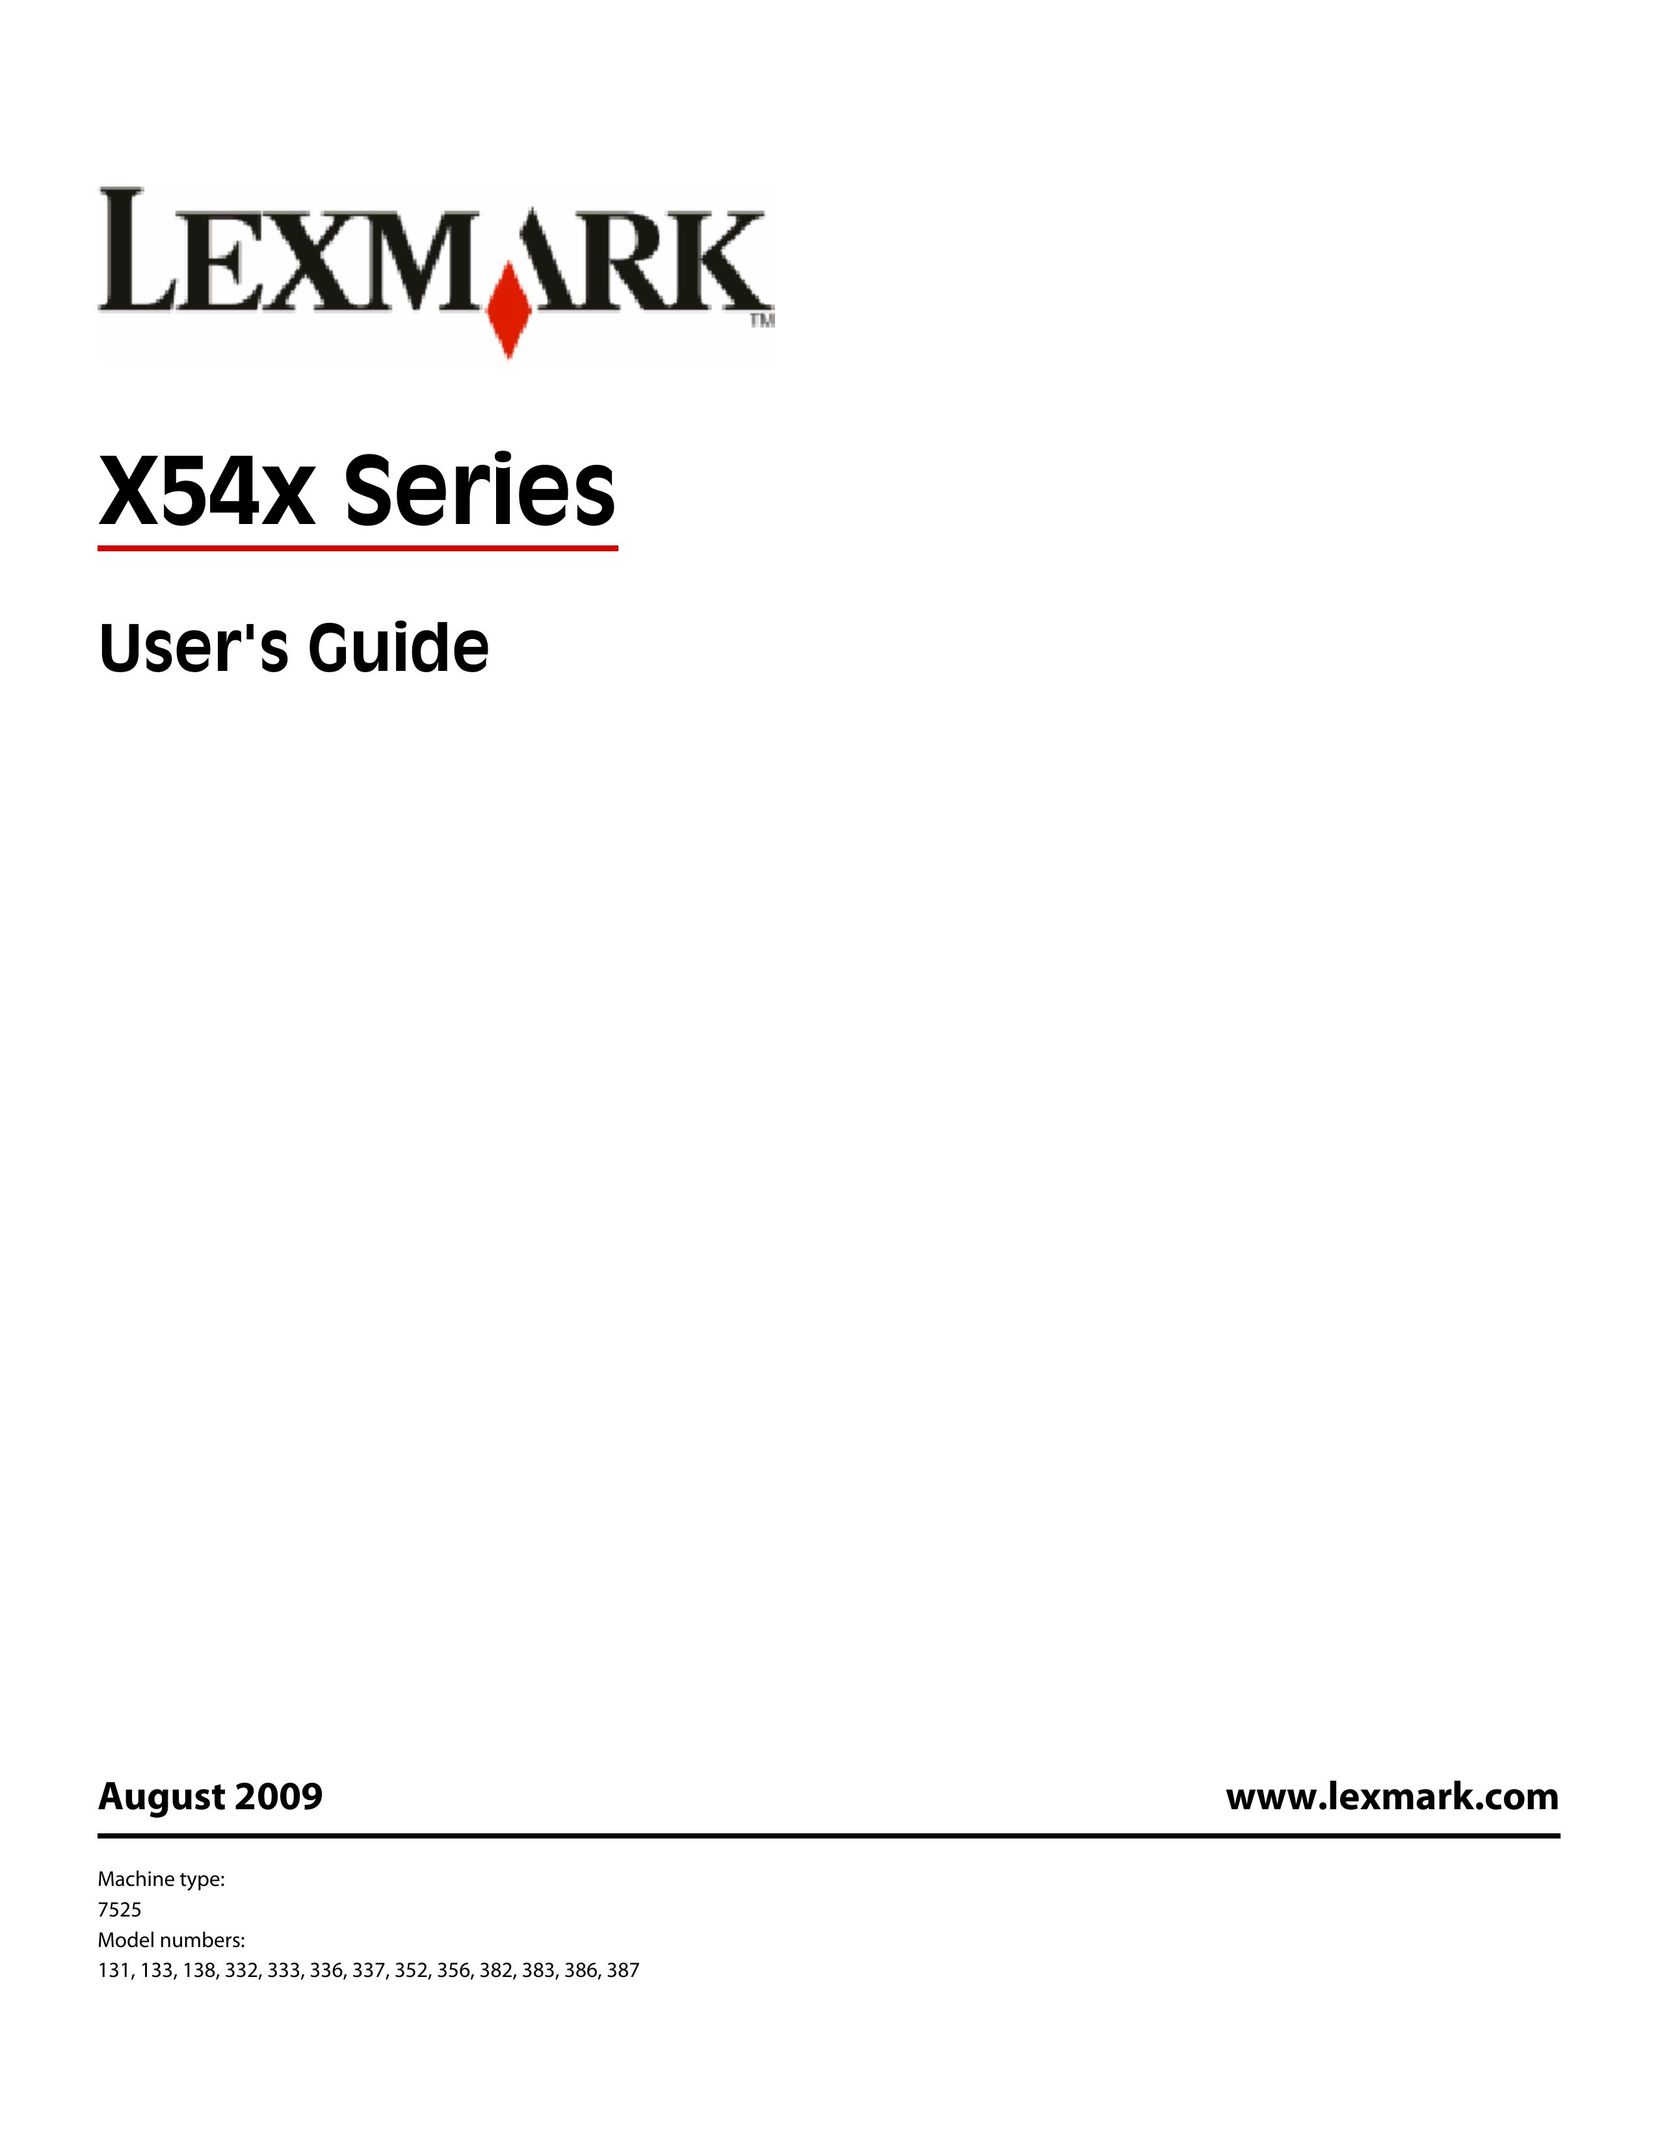 Lexmark 382 All in One Printer User Manual